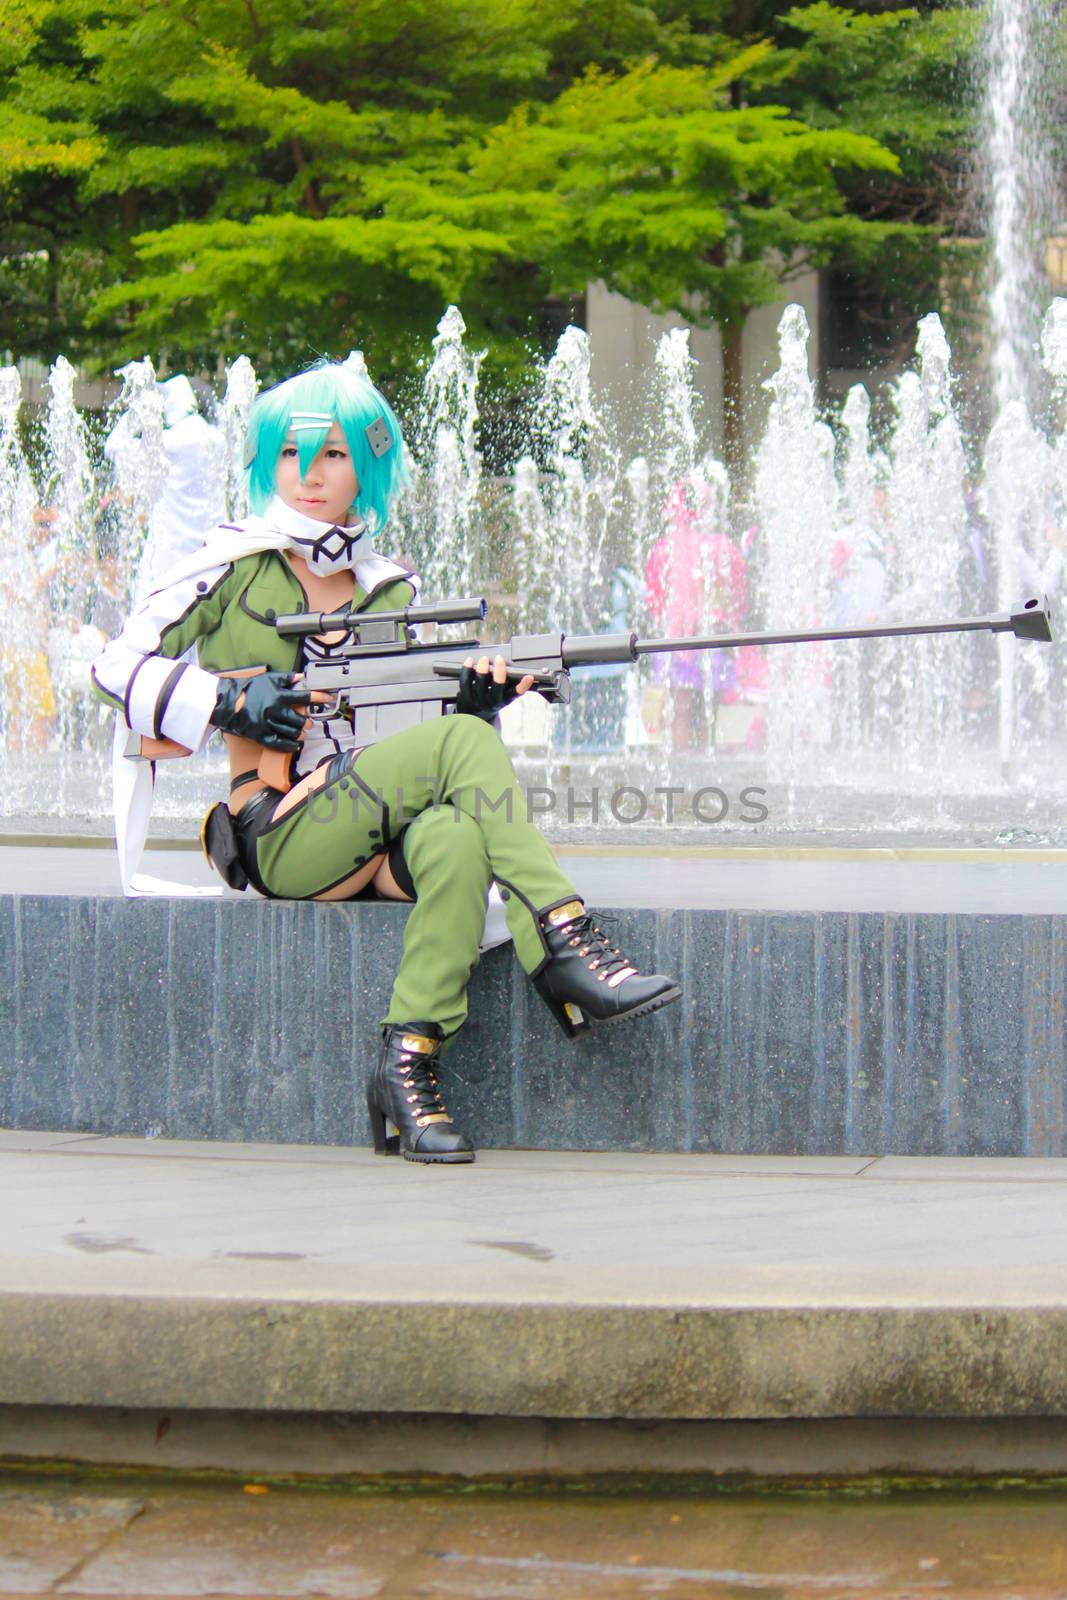 Bangkok - Aug 31: An unidentified Japanese anime cosplay Sinon pose  on August 31, 2014 at Central World, Bangkok, Thailand.